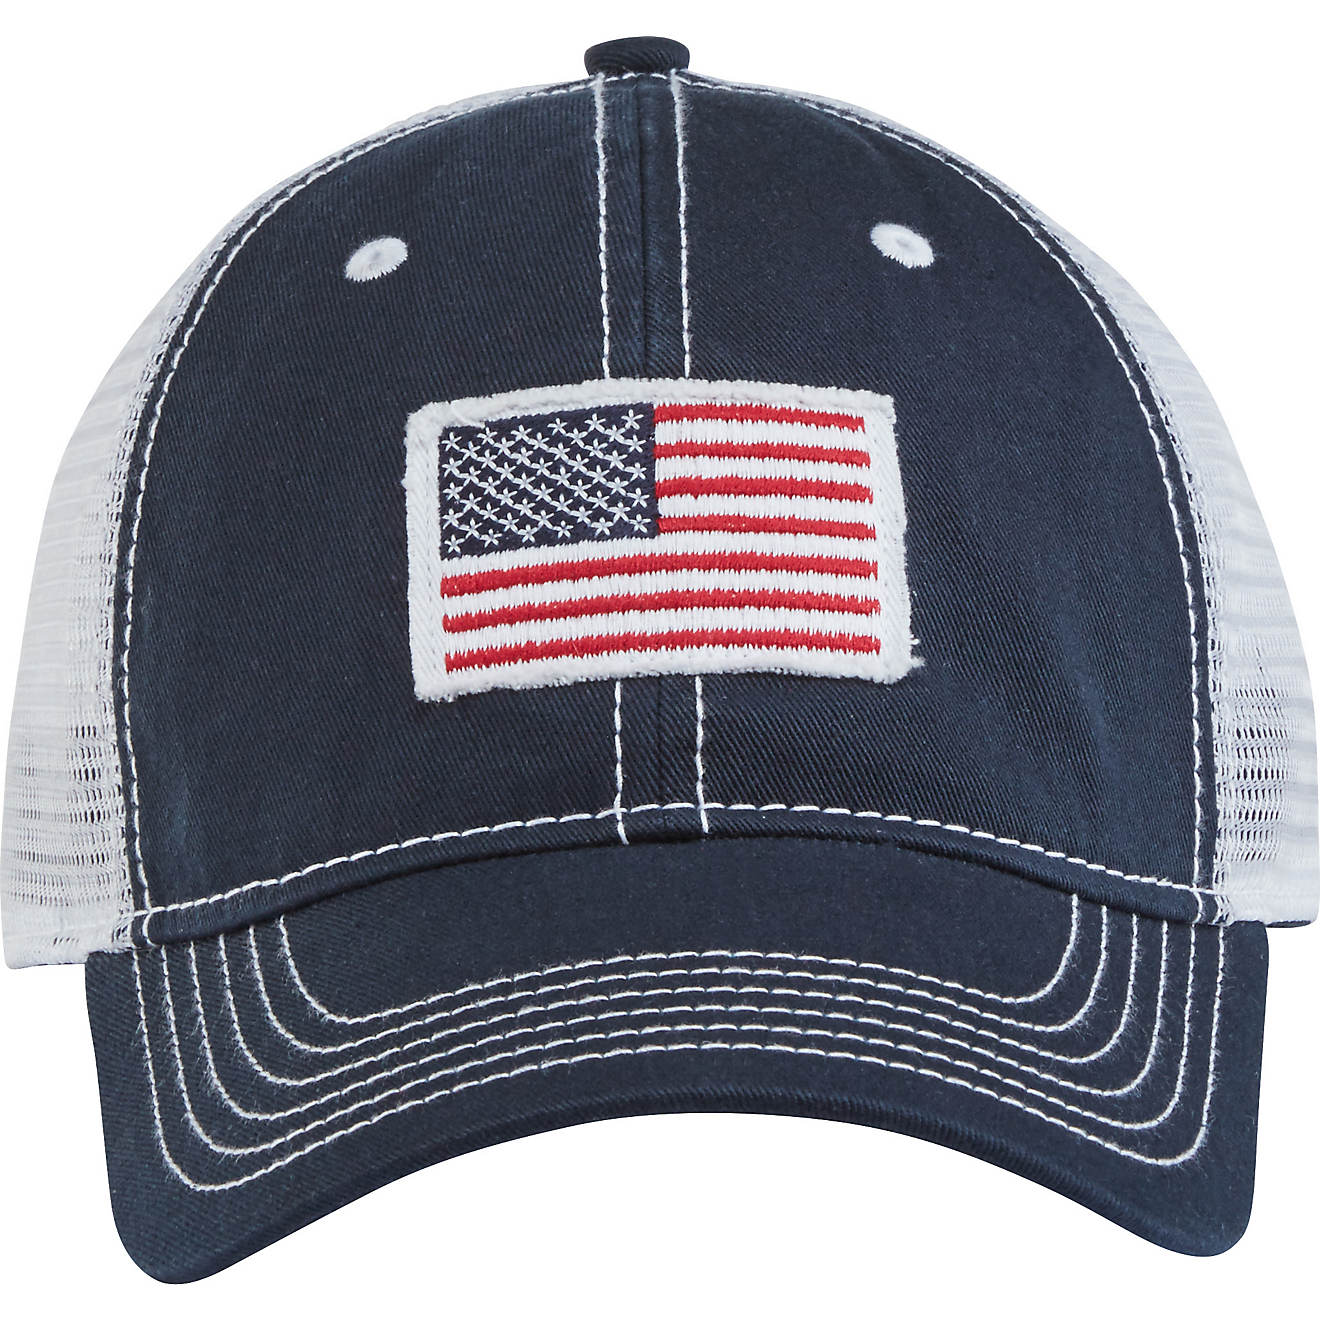 New Carhartt Distressed American Flag Mens Cap Hat 